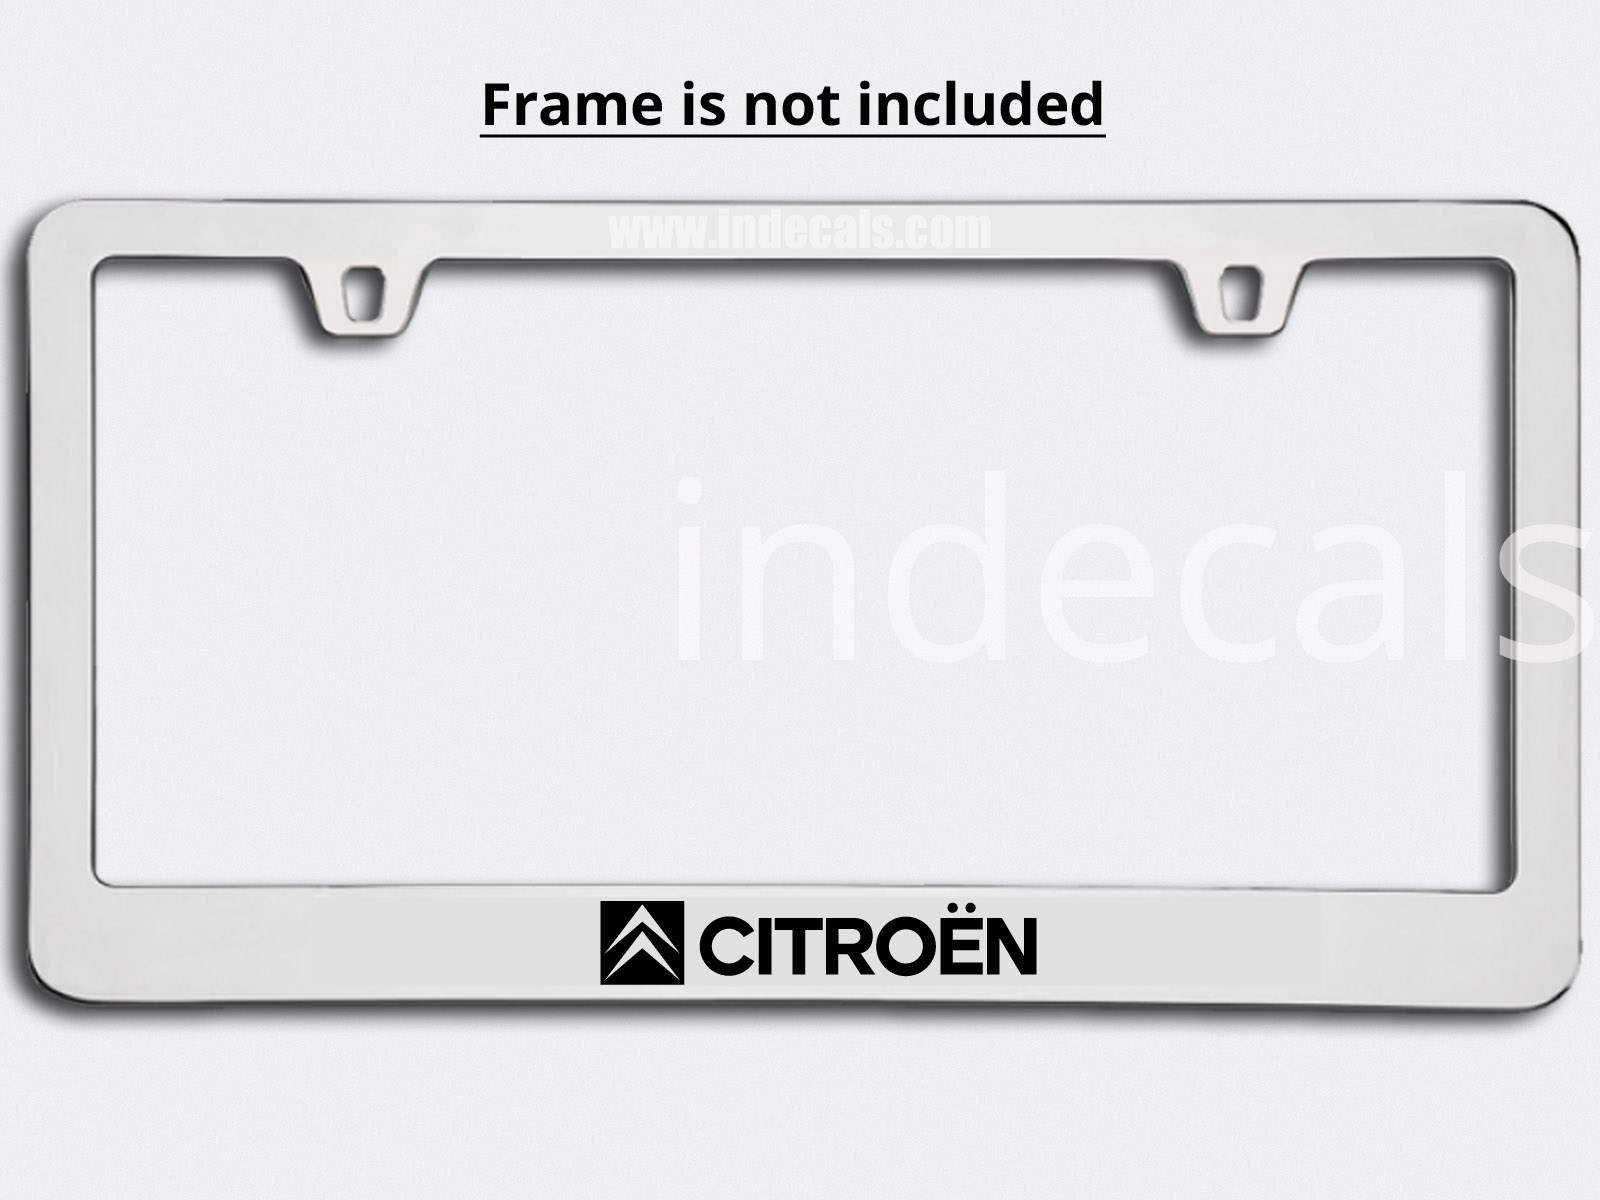 3 x Citroen Stickers for Plate Frame - Black